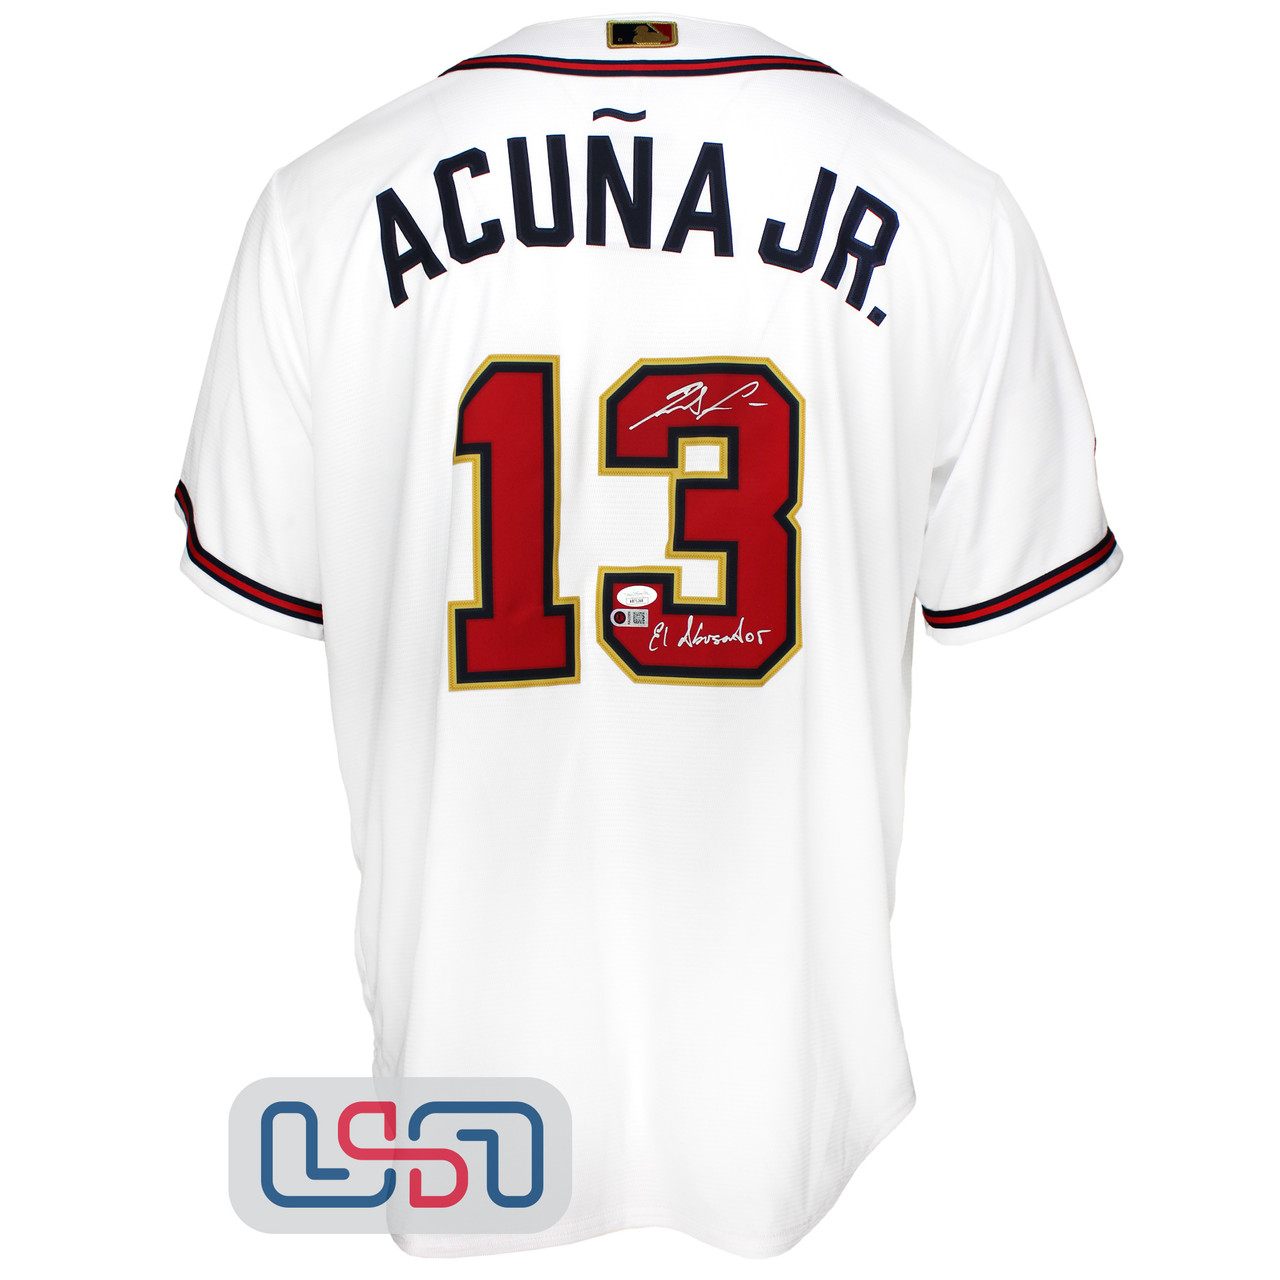 Atlanta Braves Ronald Acuna Jr. Autographed White Nike Jersey Size